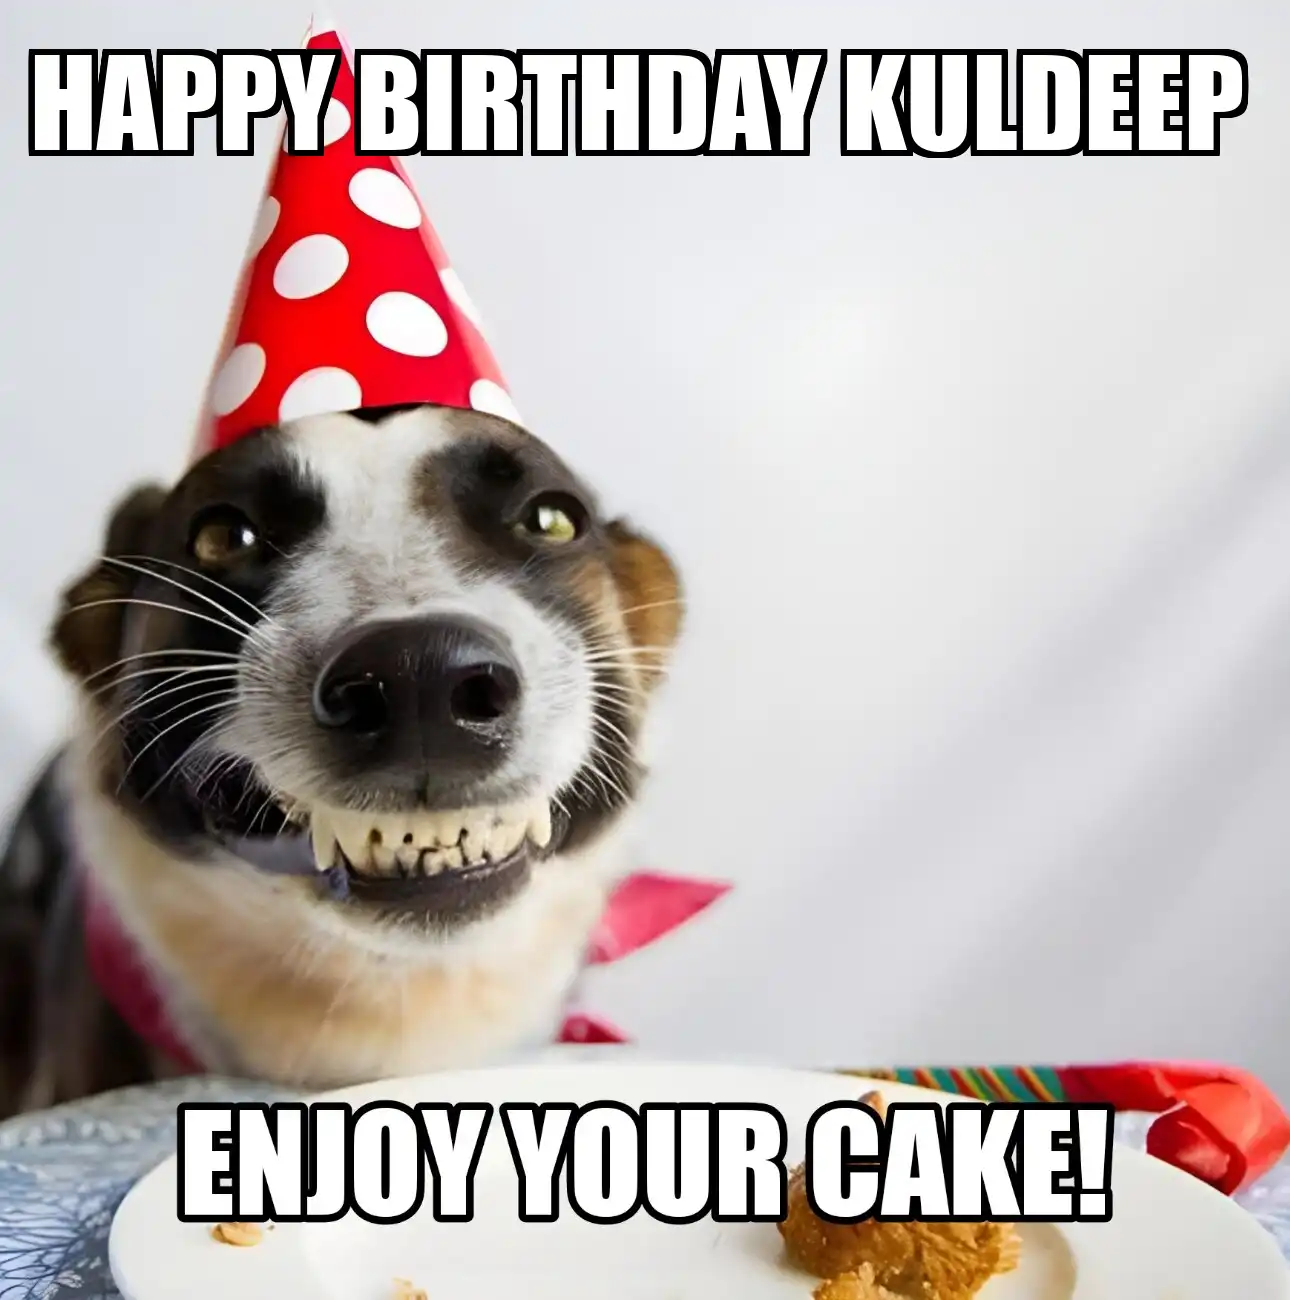 Happy Birthday Kuldeep Enjoy Your Cake Dog Meme